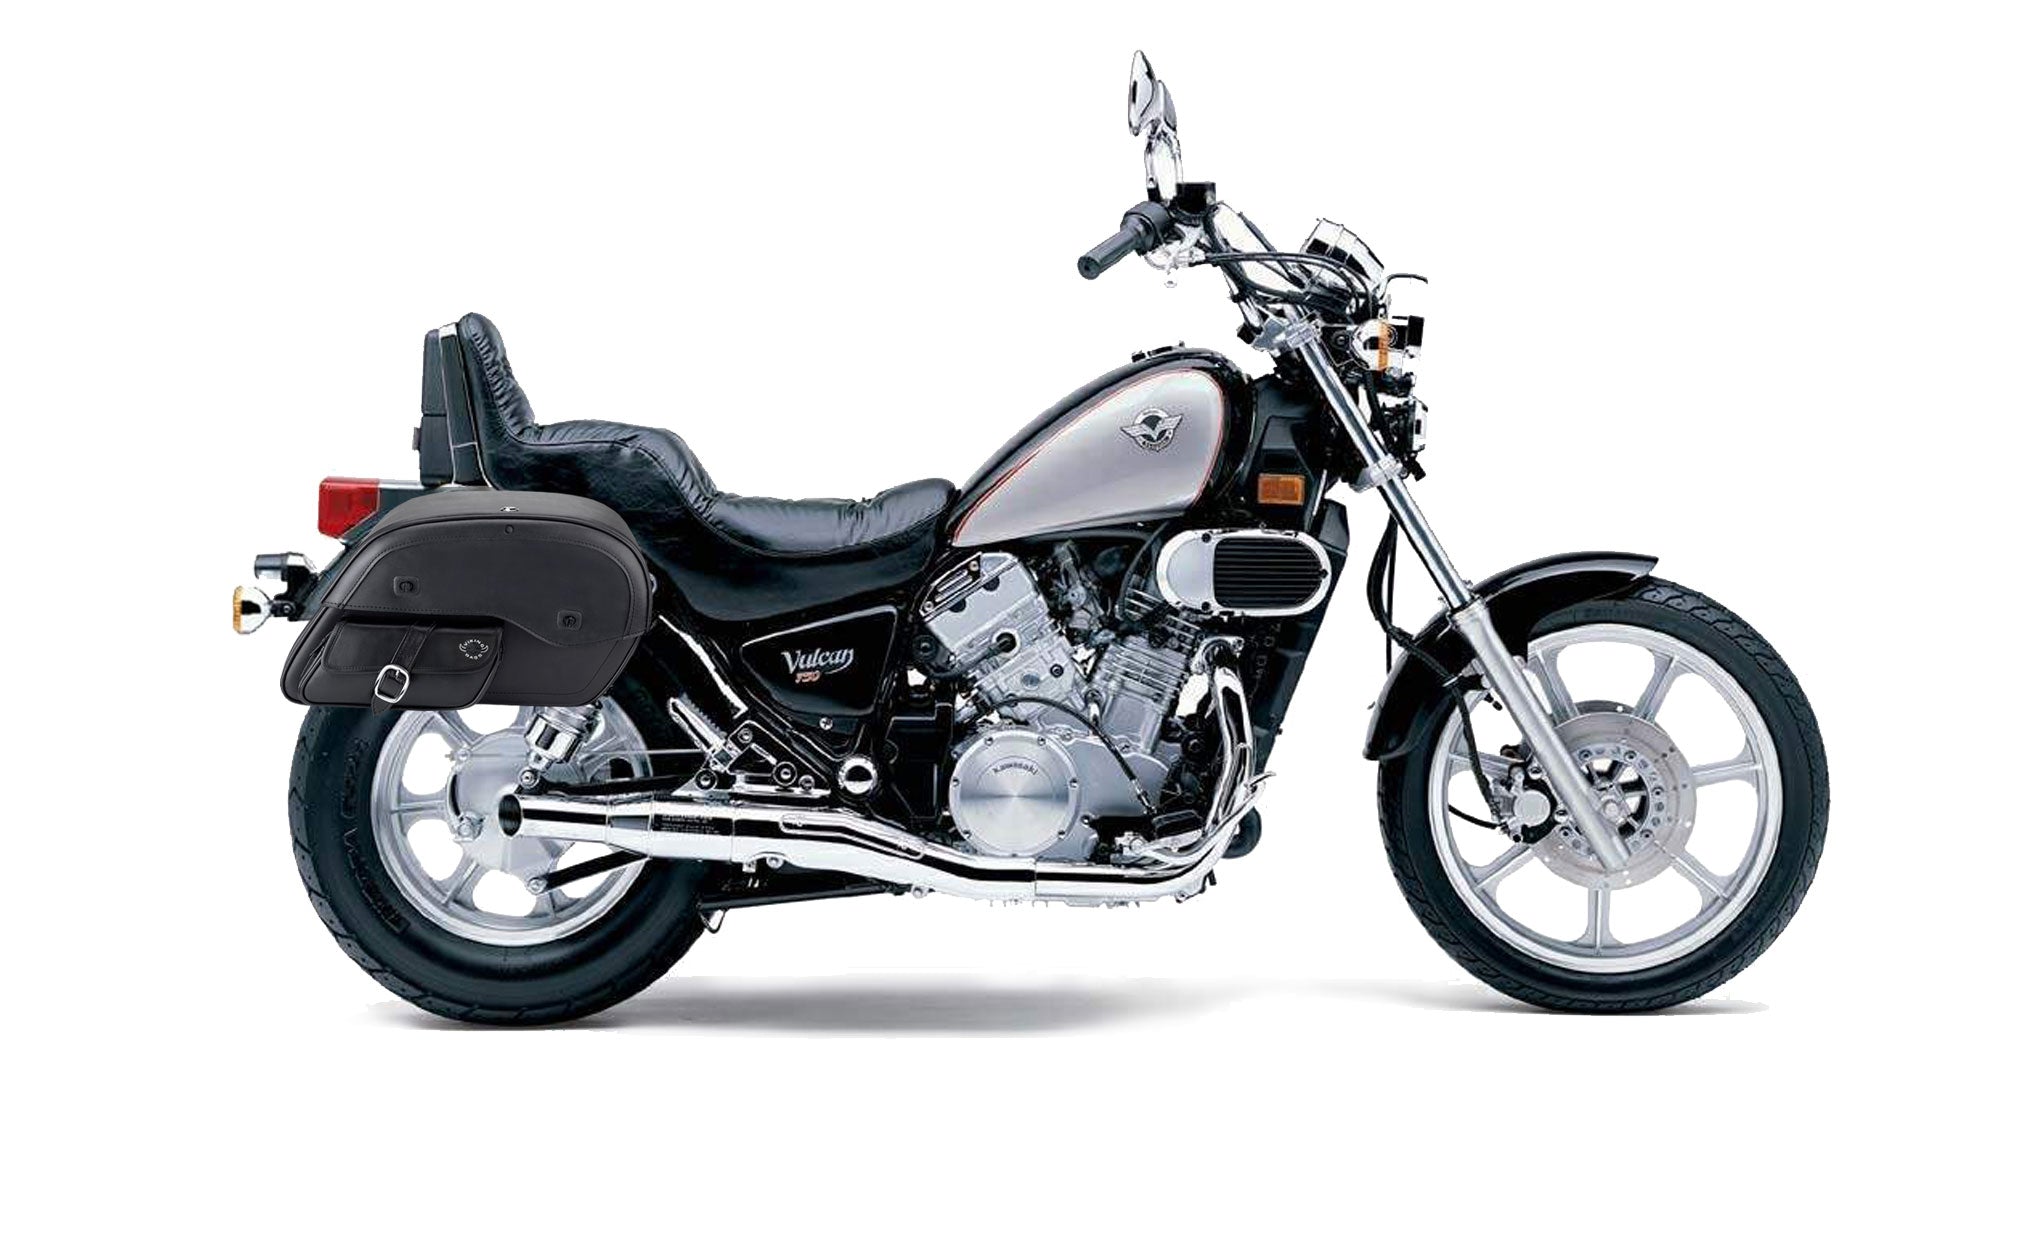 Viking Essential Side Pocket Large Kawasaki Vulcan 750 Vn750 Leather Motorcycle Saddlebags on Bike Photo @expand